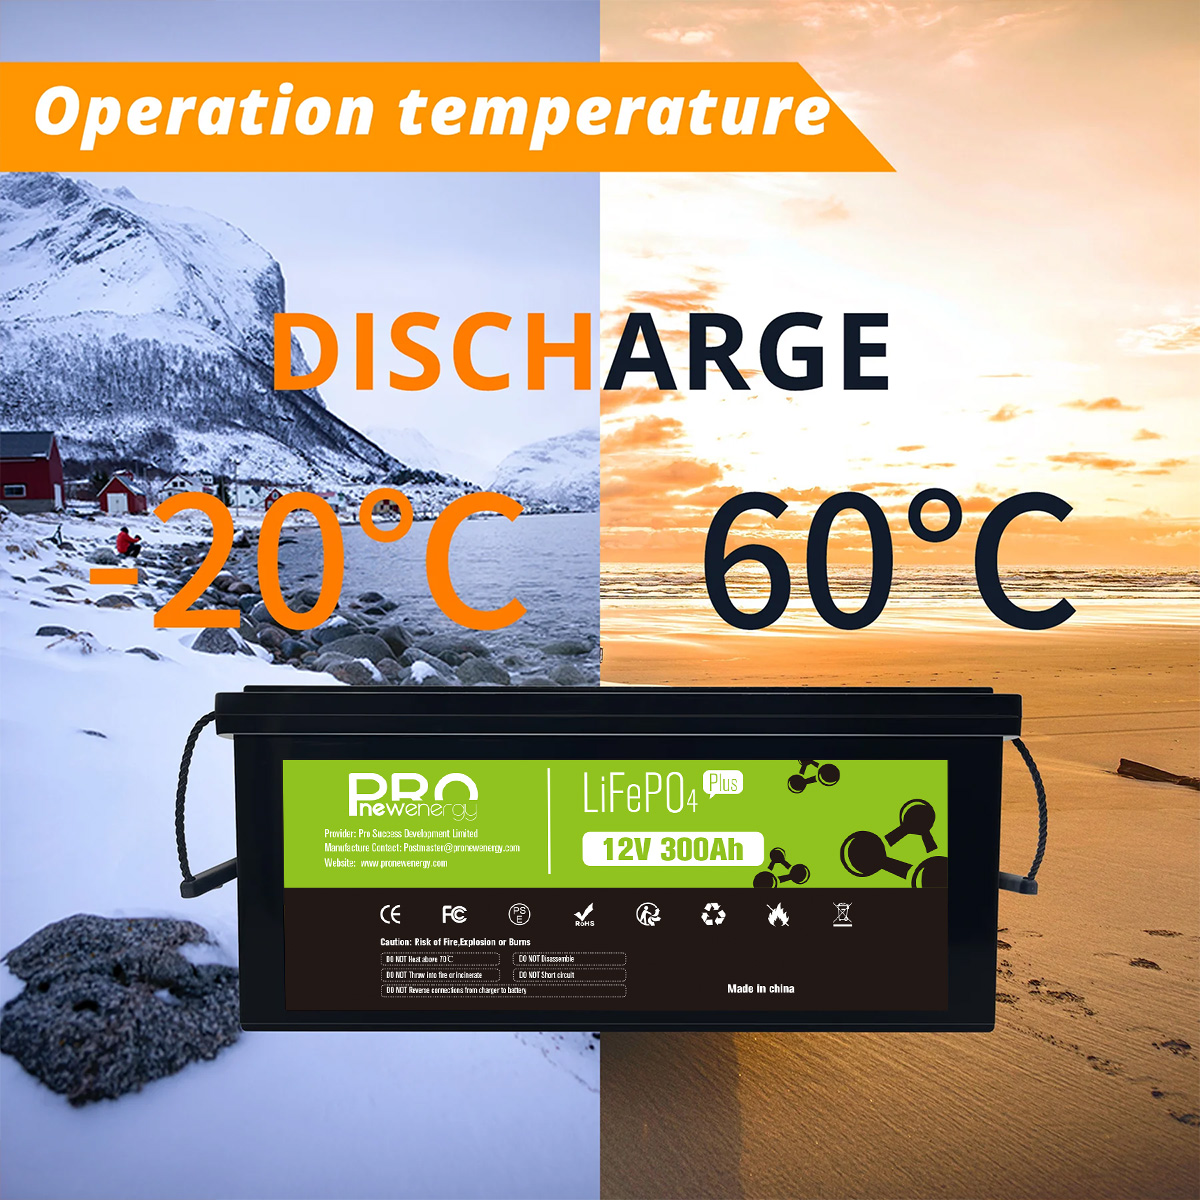 12v 300ah lithium battery temperature performance